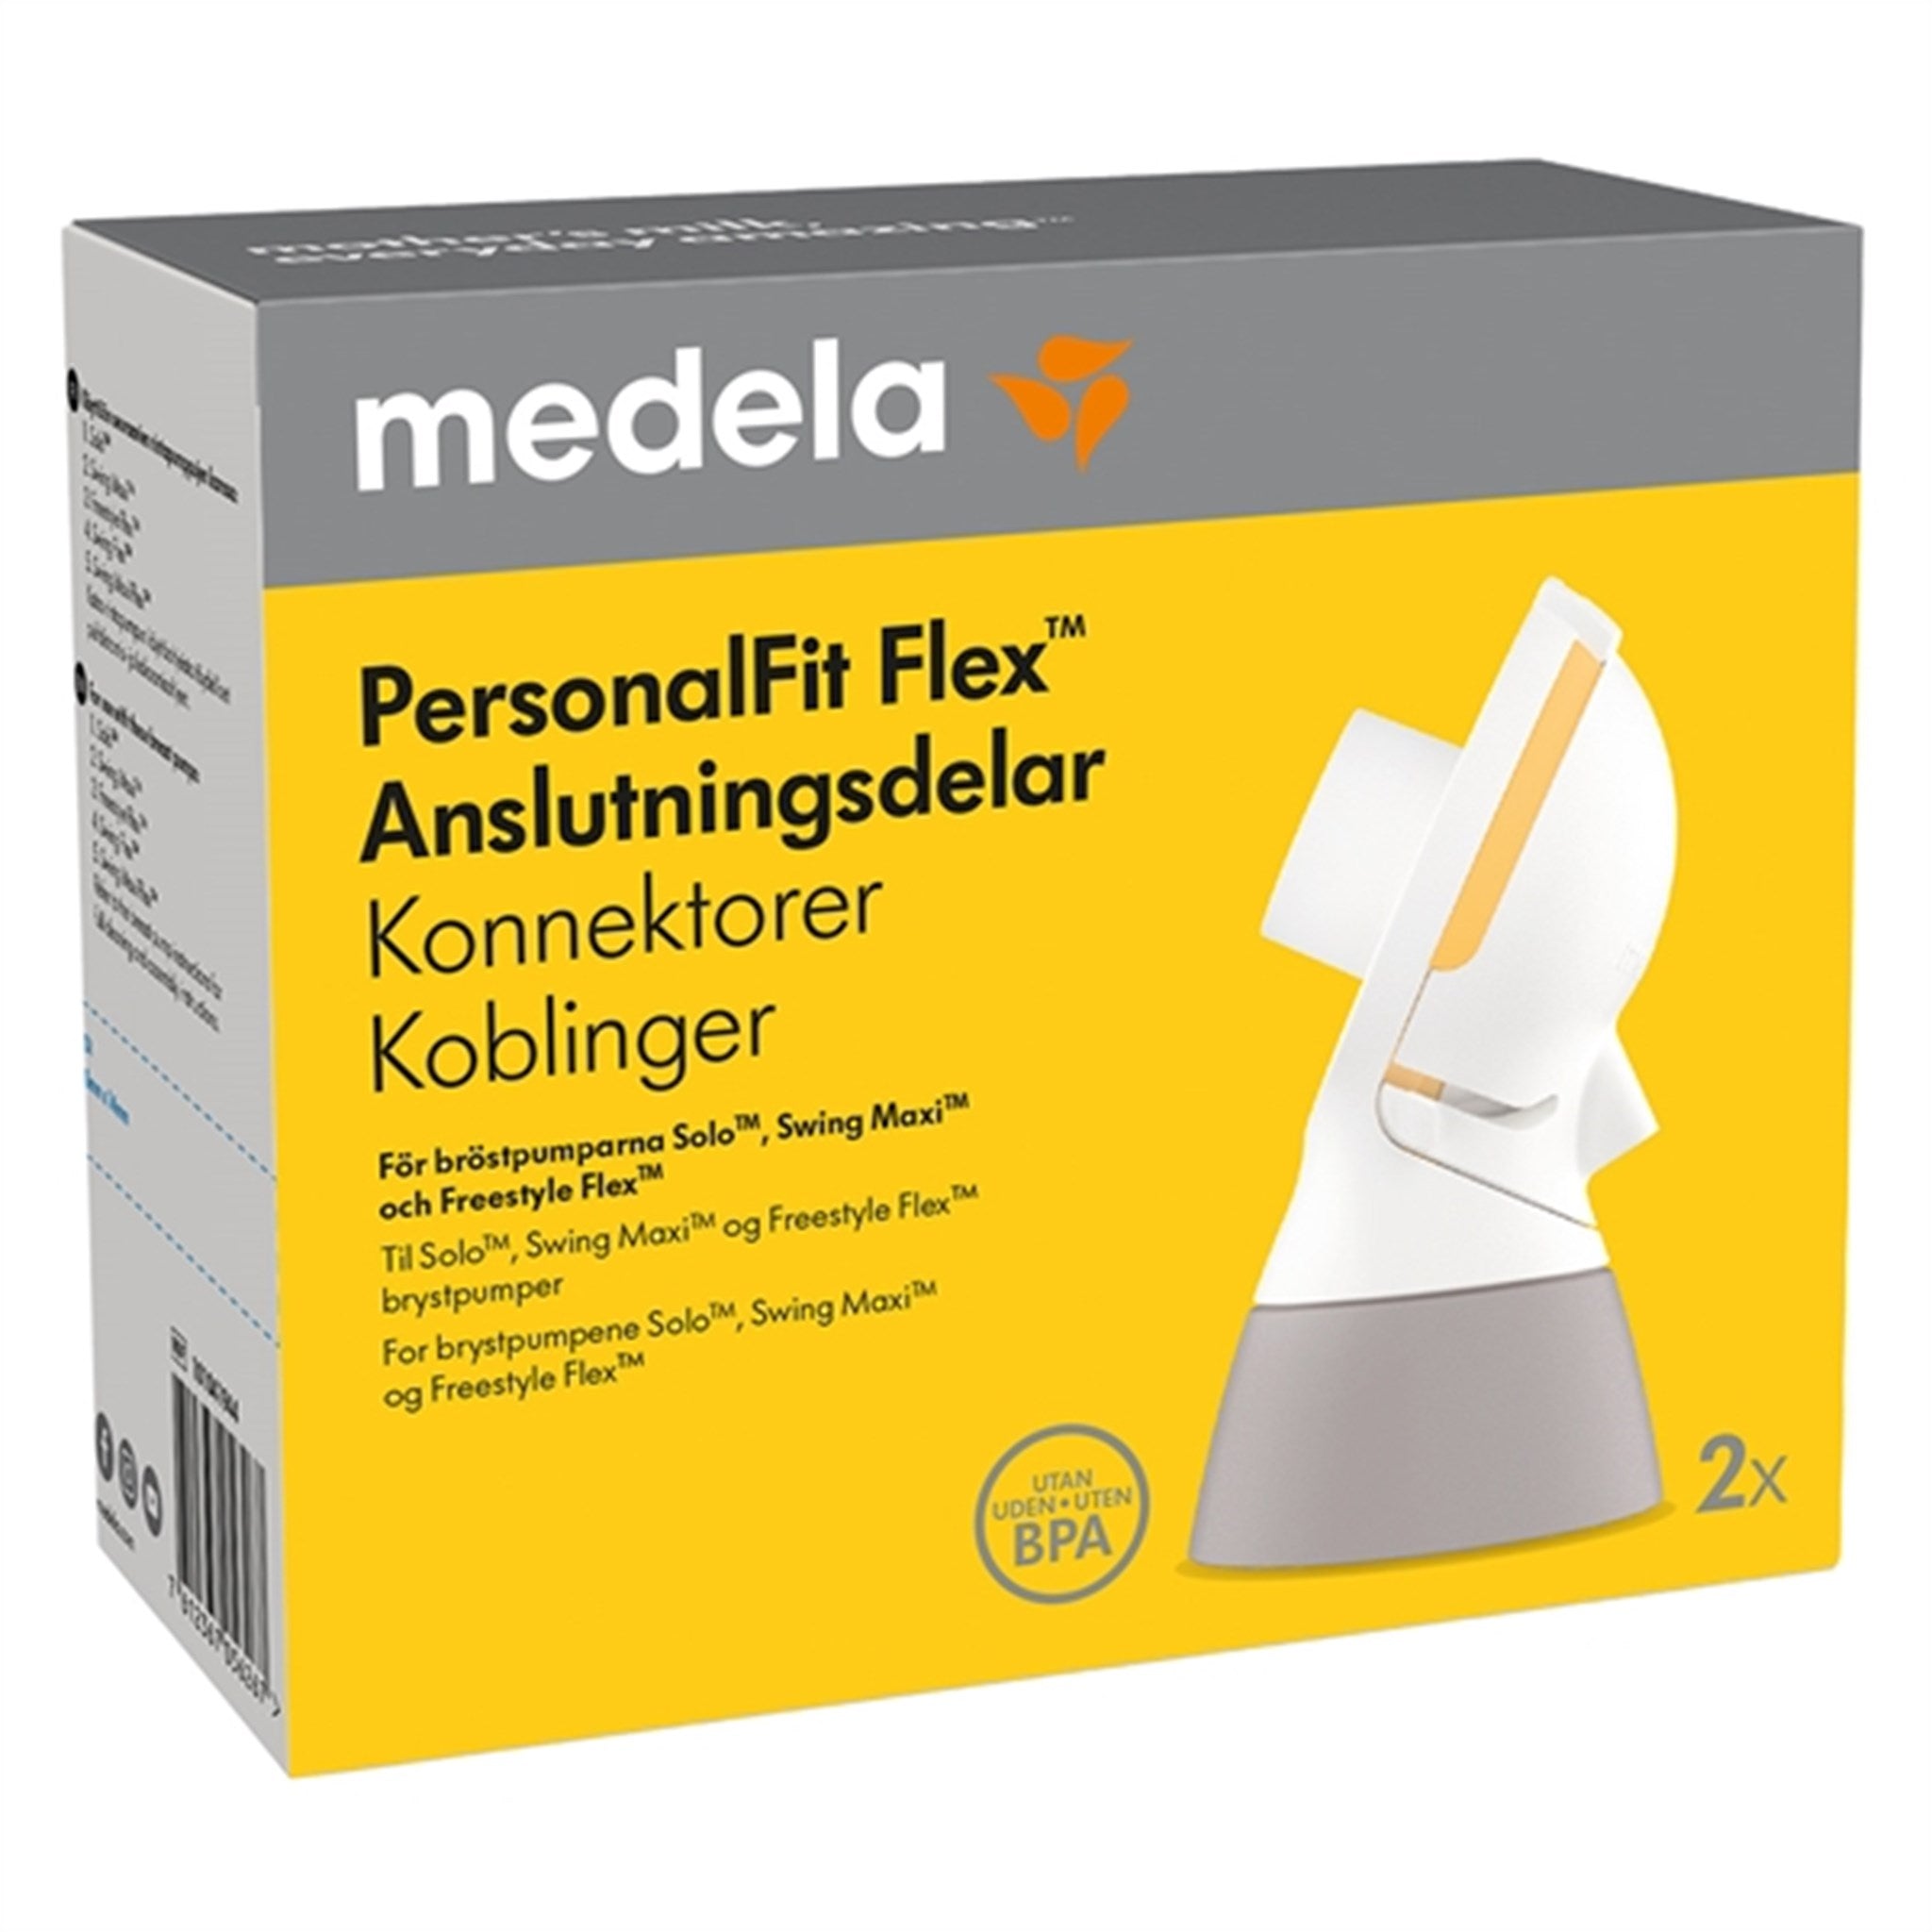 medela PersonalFit Flex Kontakten, 2-Pack